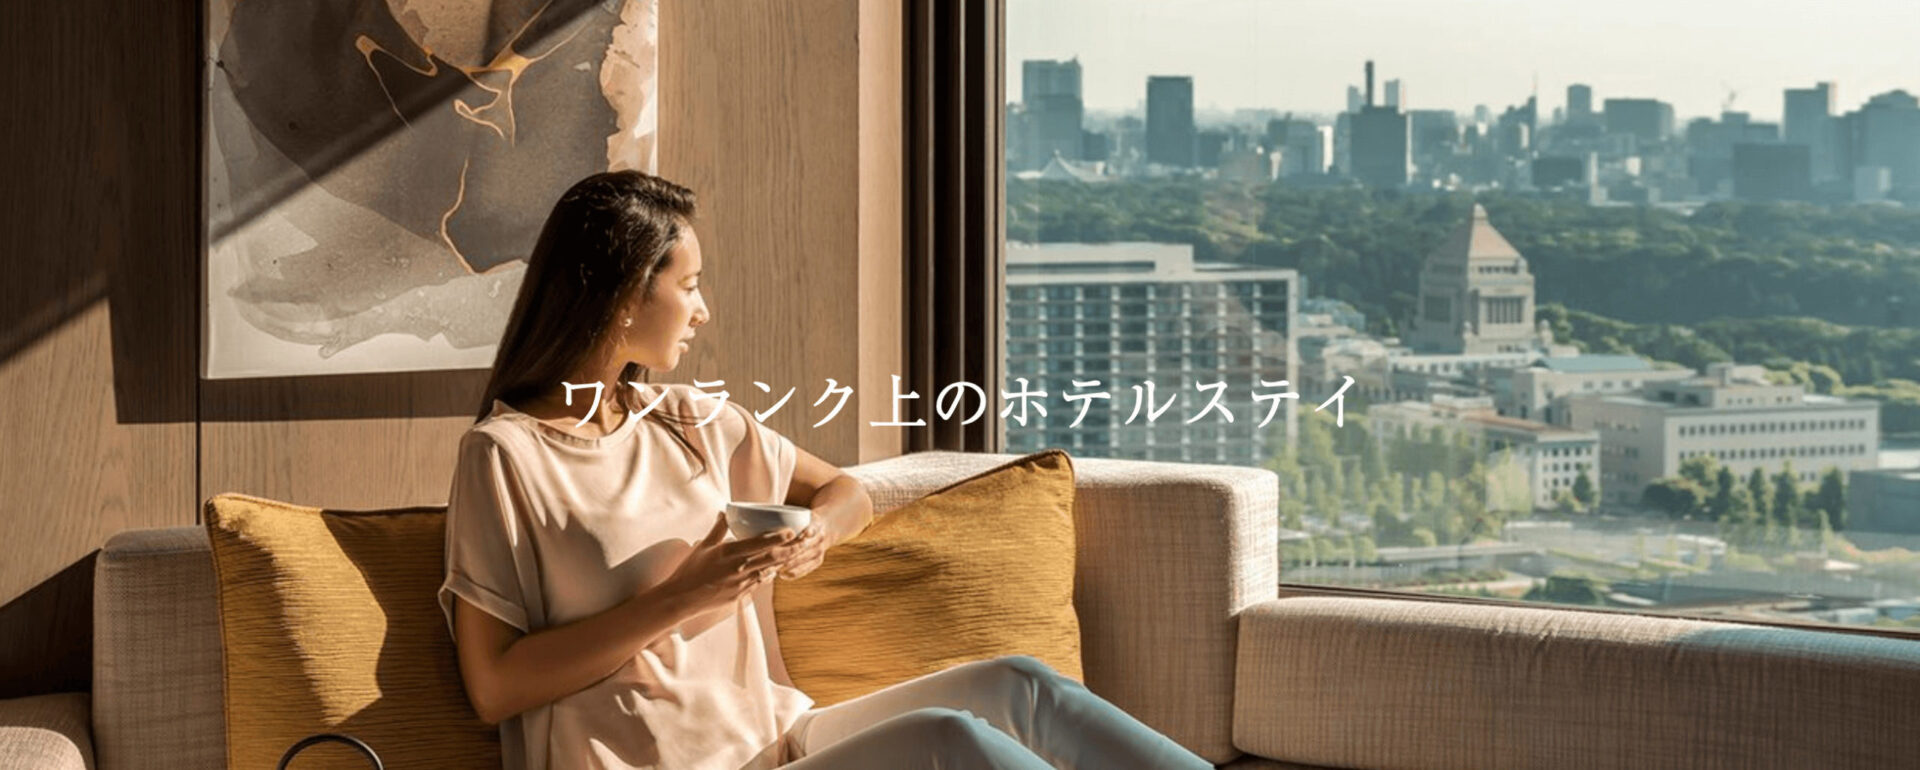 ANAインターコンチネンタルホテル東京 クラブルームとは